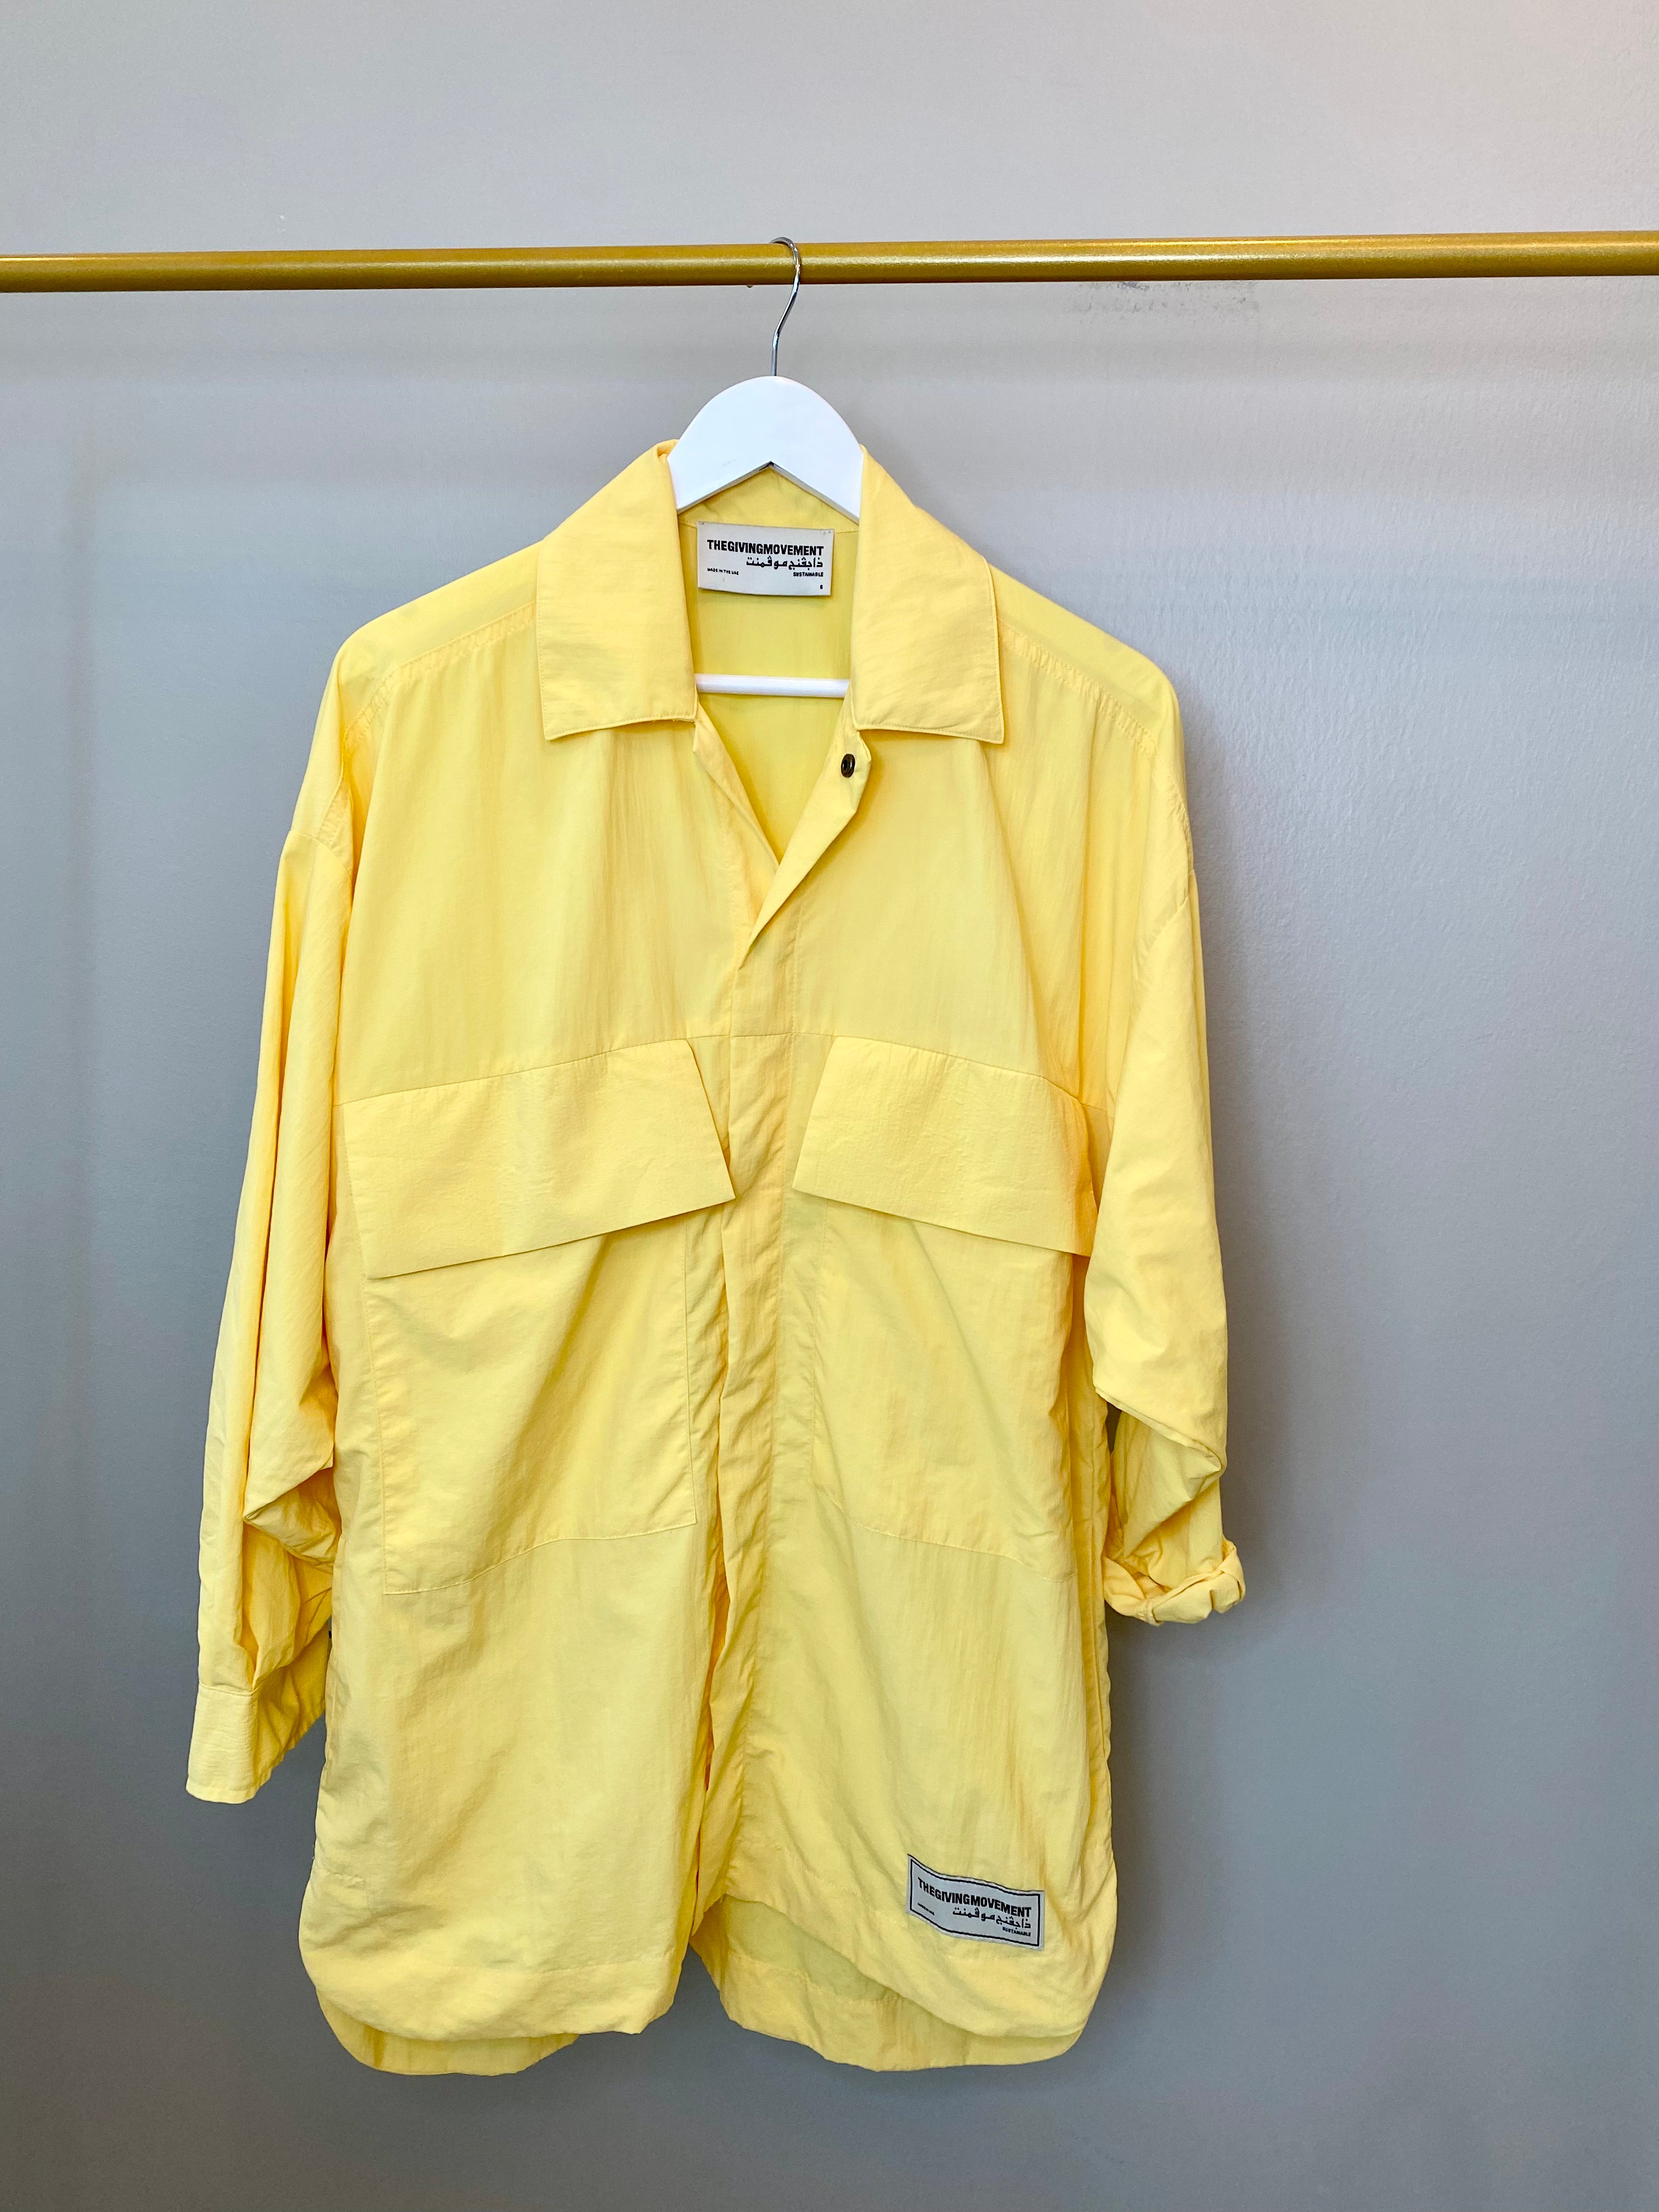 Bright yellow oversized raincoat style flannel - THEGIVINGMOVEMENT